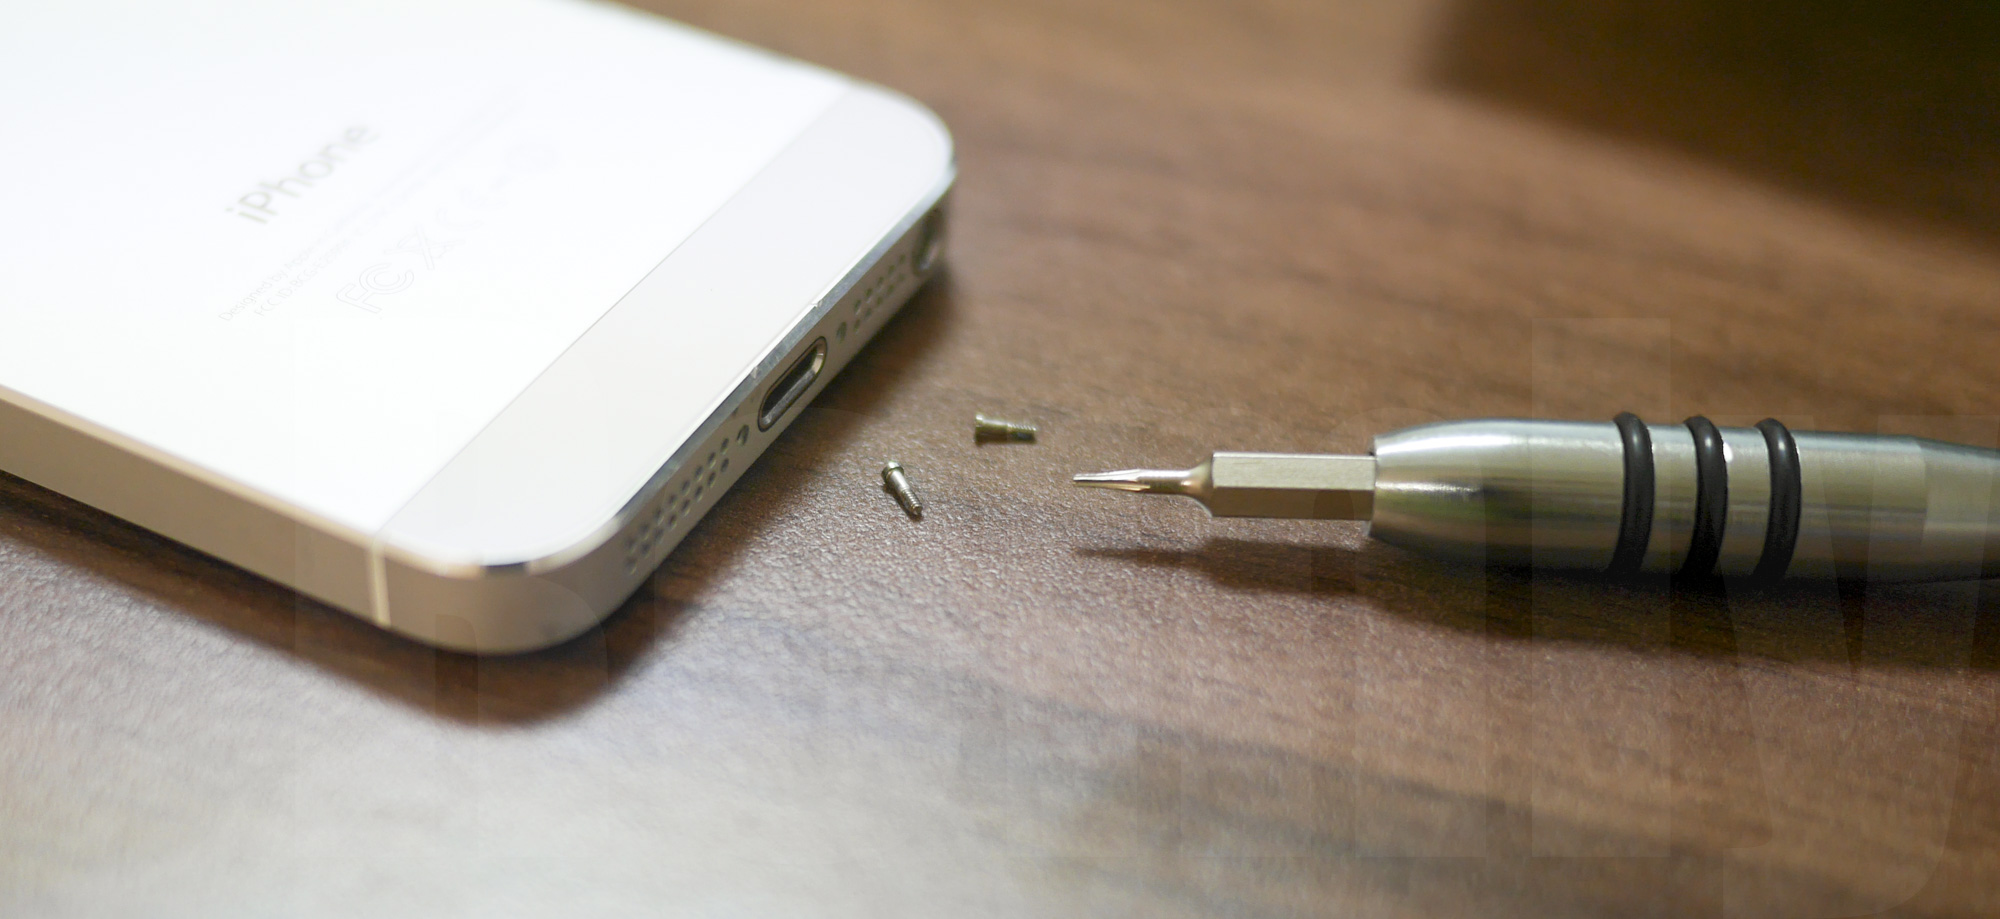 iPhone 5 Battery replacement: using Pentalobe screwdriver